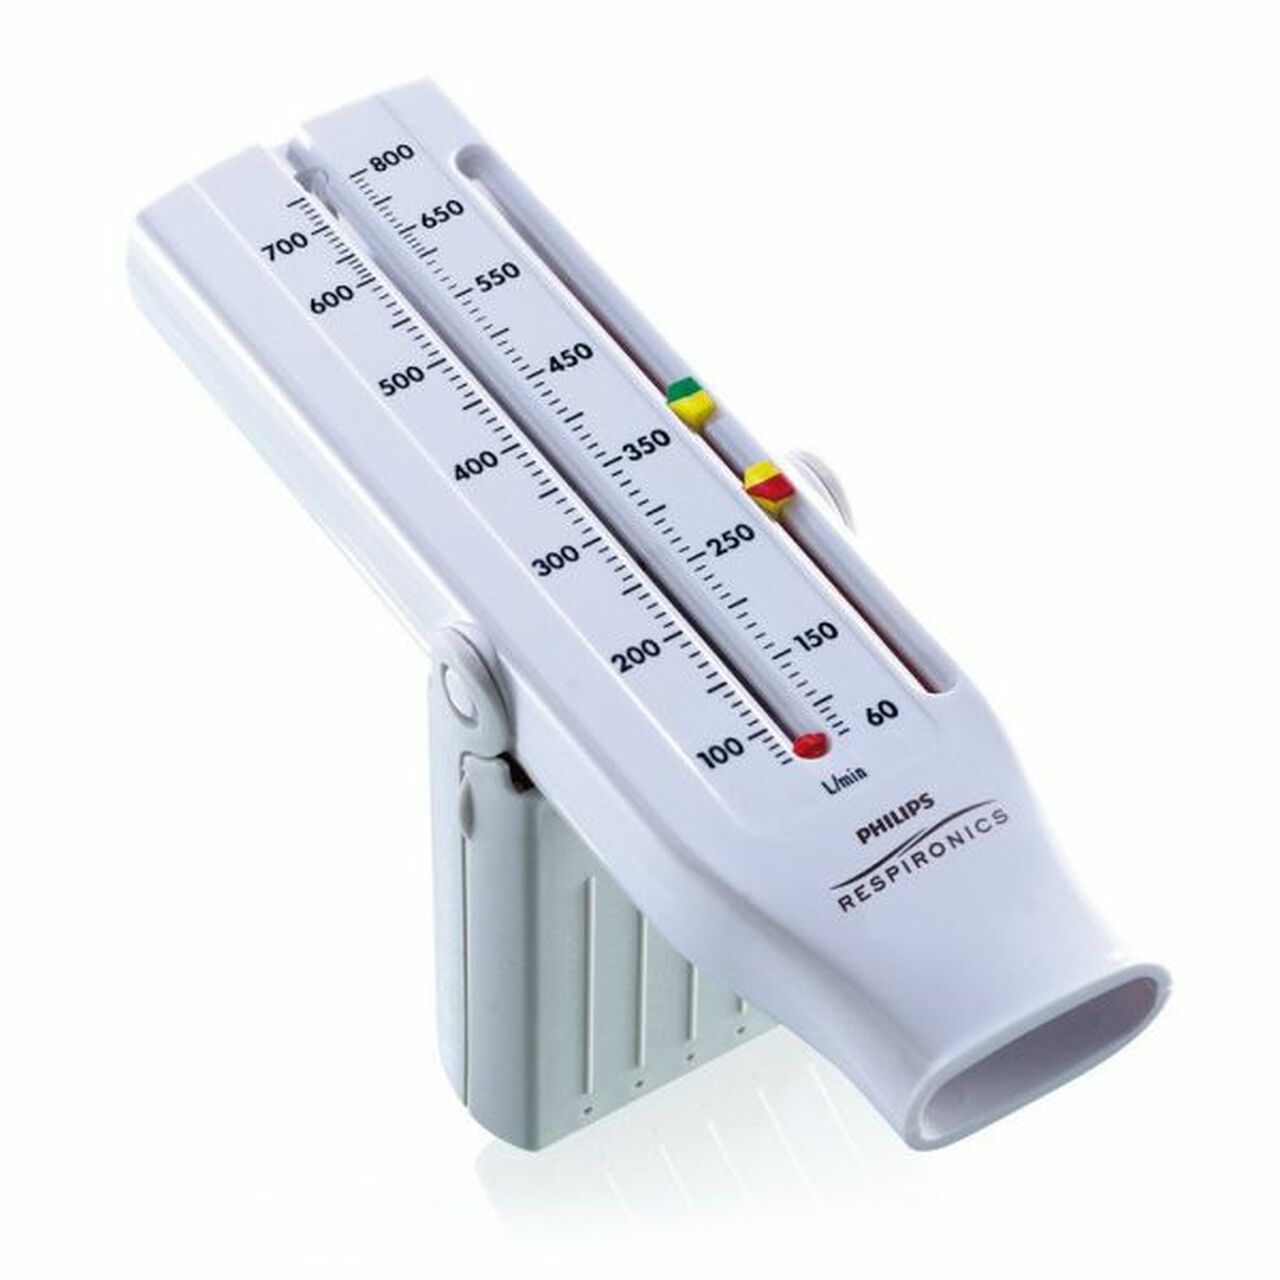 Respironics HS755-012 Personal Best Peak Flow Meter, Full Range